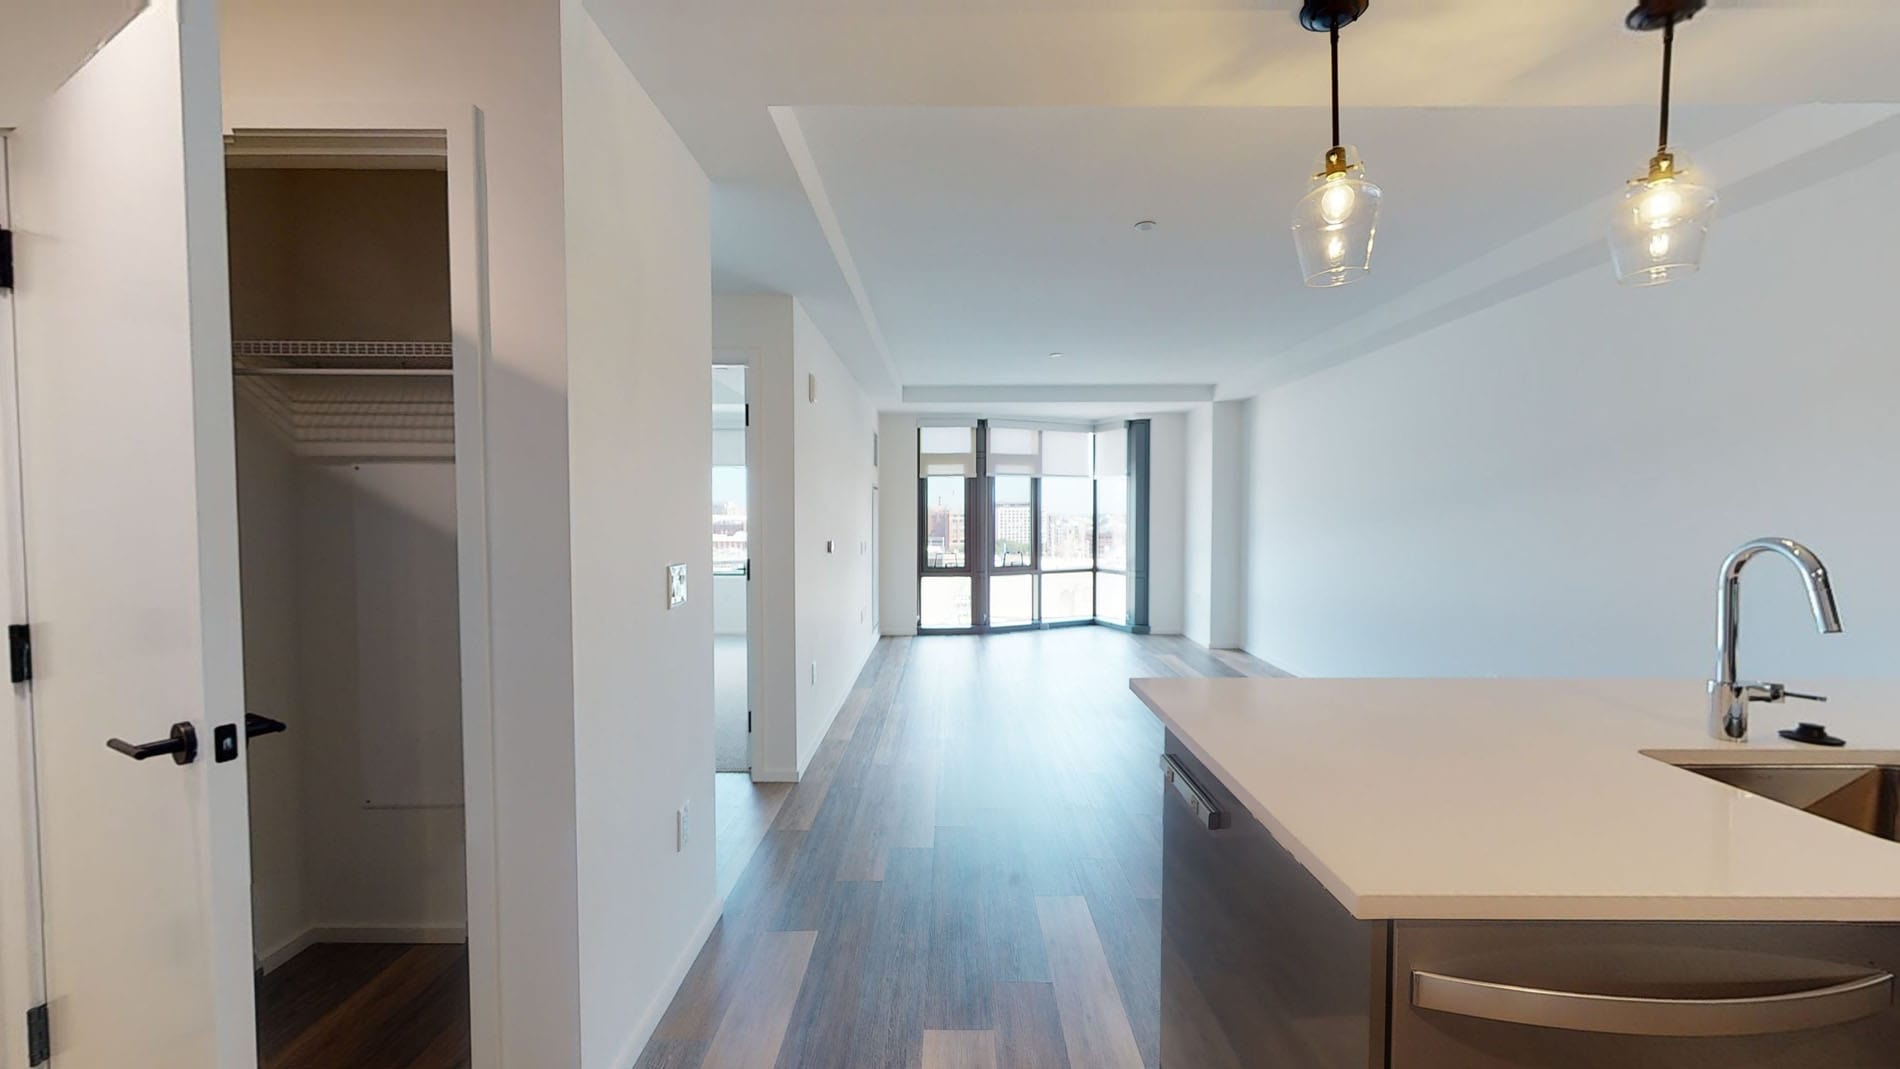 Photos of apartment on Tremont St.,Boston MA 02118